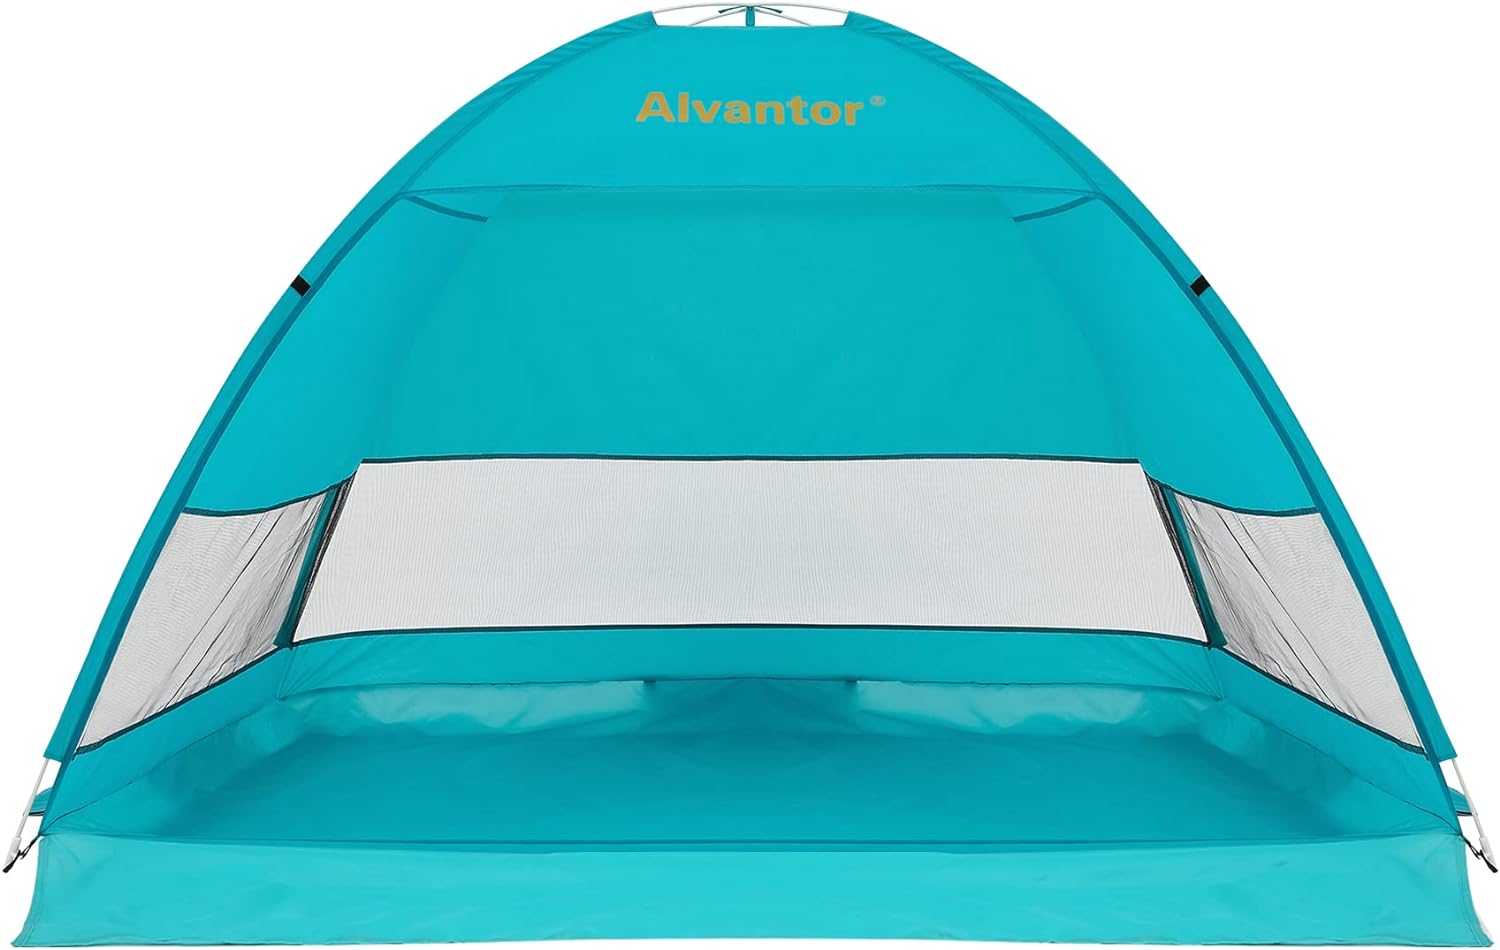 Alvantor Coolhut Instant Pop Up Beach Tent Plus